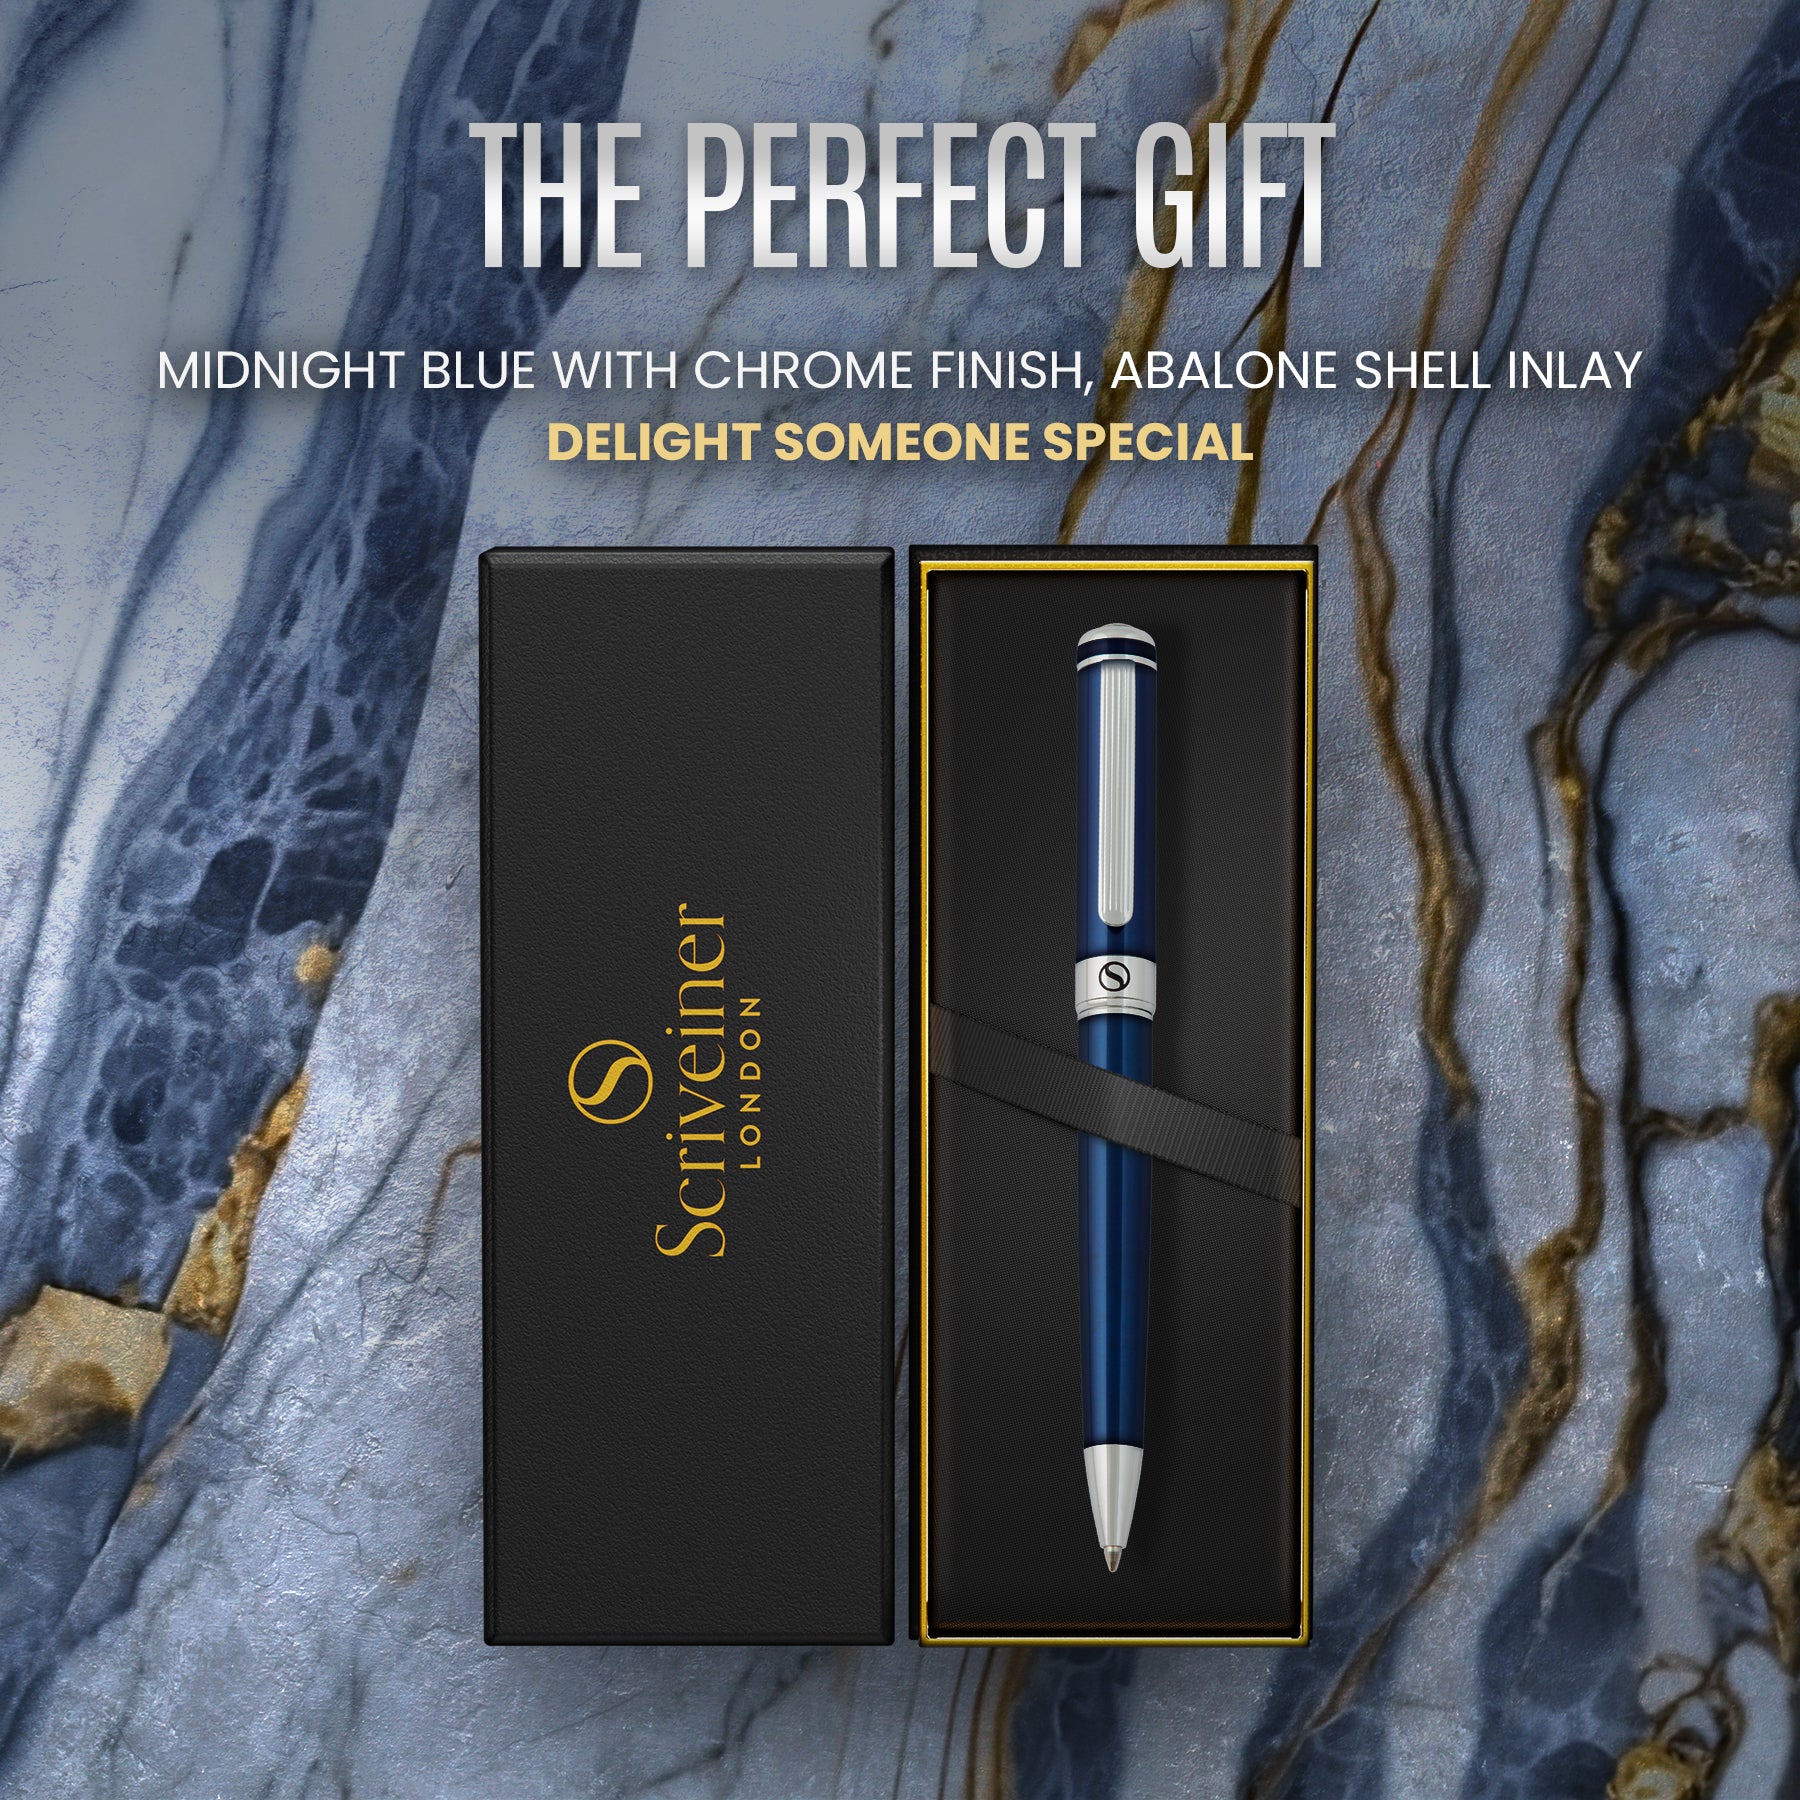 Scriveiner Classic Midnight Blue ballpoint Pen